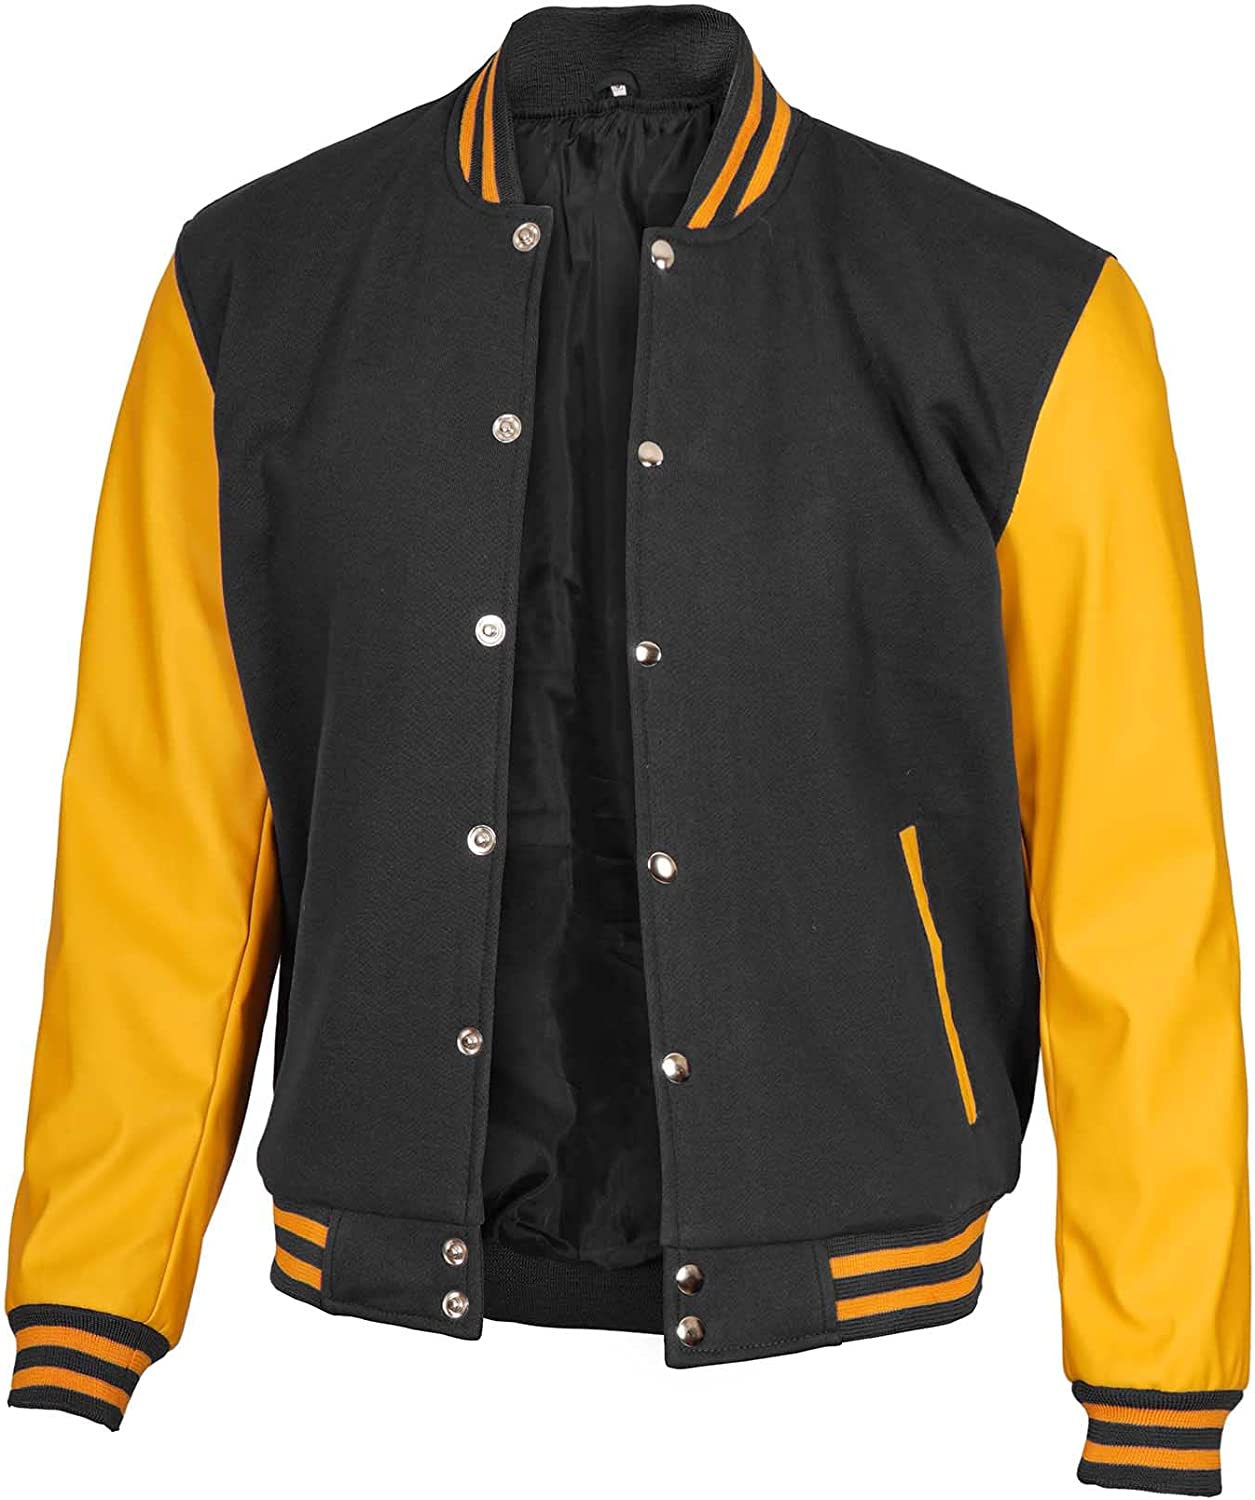 Buy Decrum Black and Yellow Letterman Jacket Men - High School